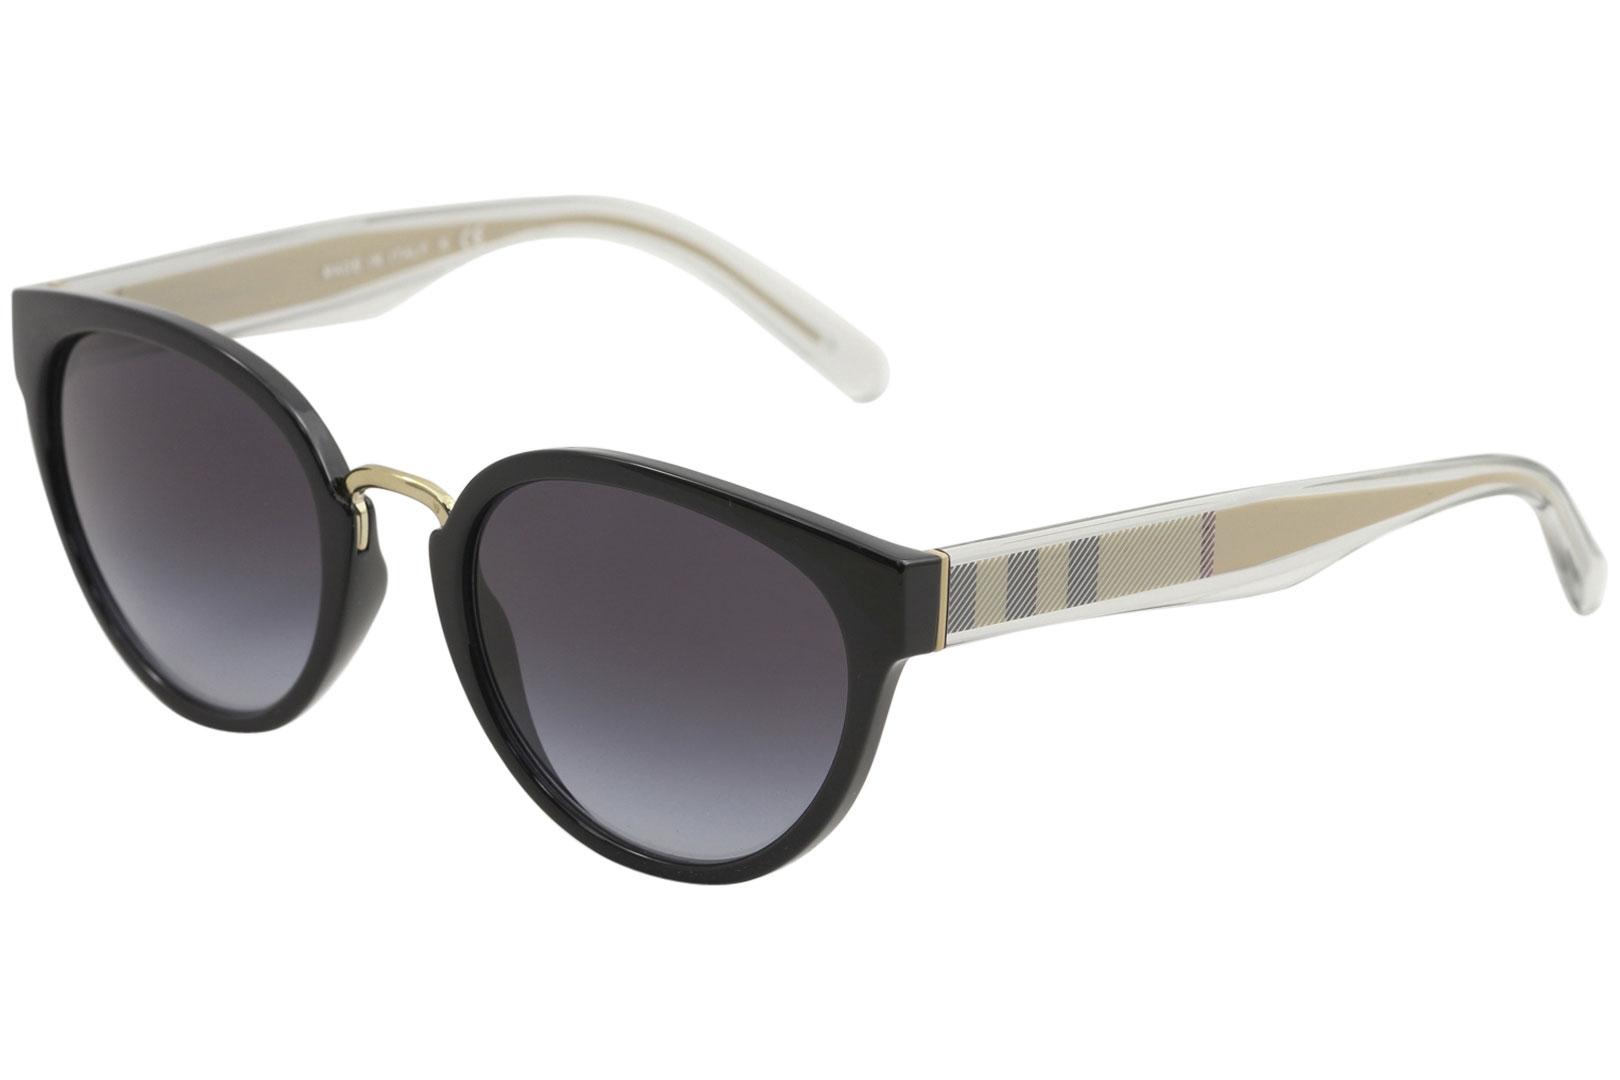 Burberry Women's BE4249 BE/4249 Fashion Cat Eye Sunglasses - Black/Grey Gradient   3001/8G - Lens 53 Bridge 21 Temple 140mm